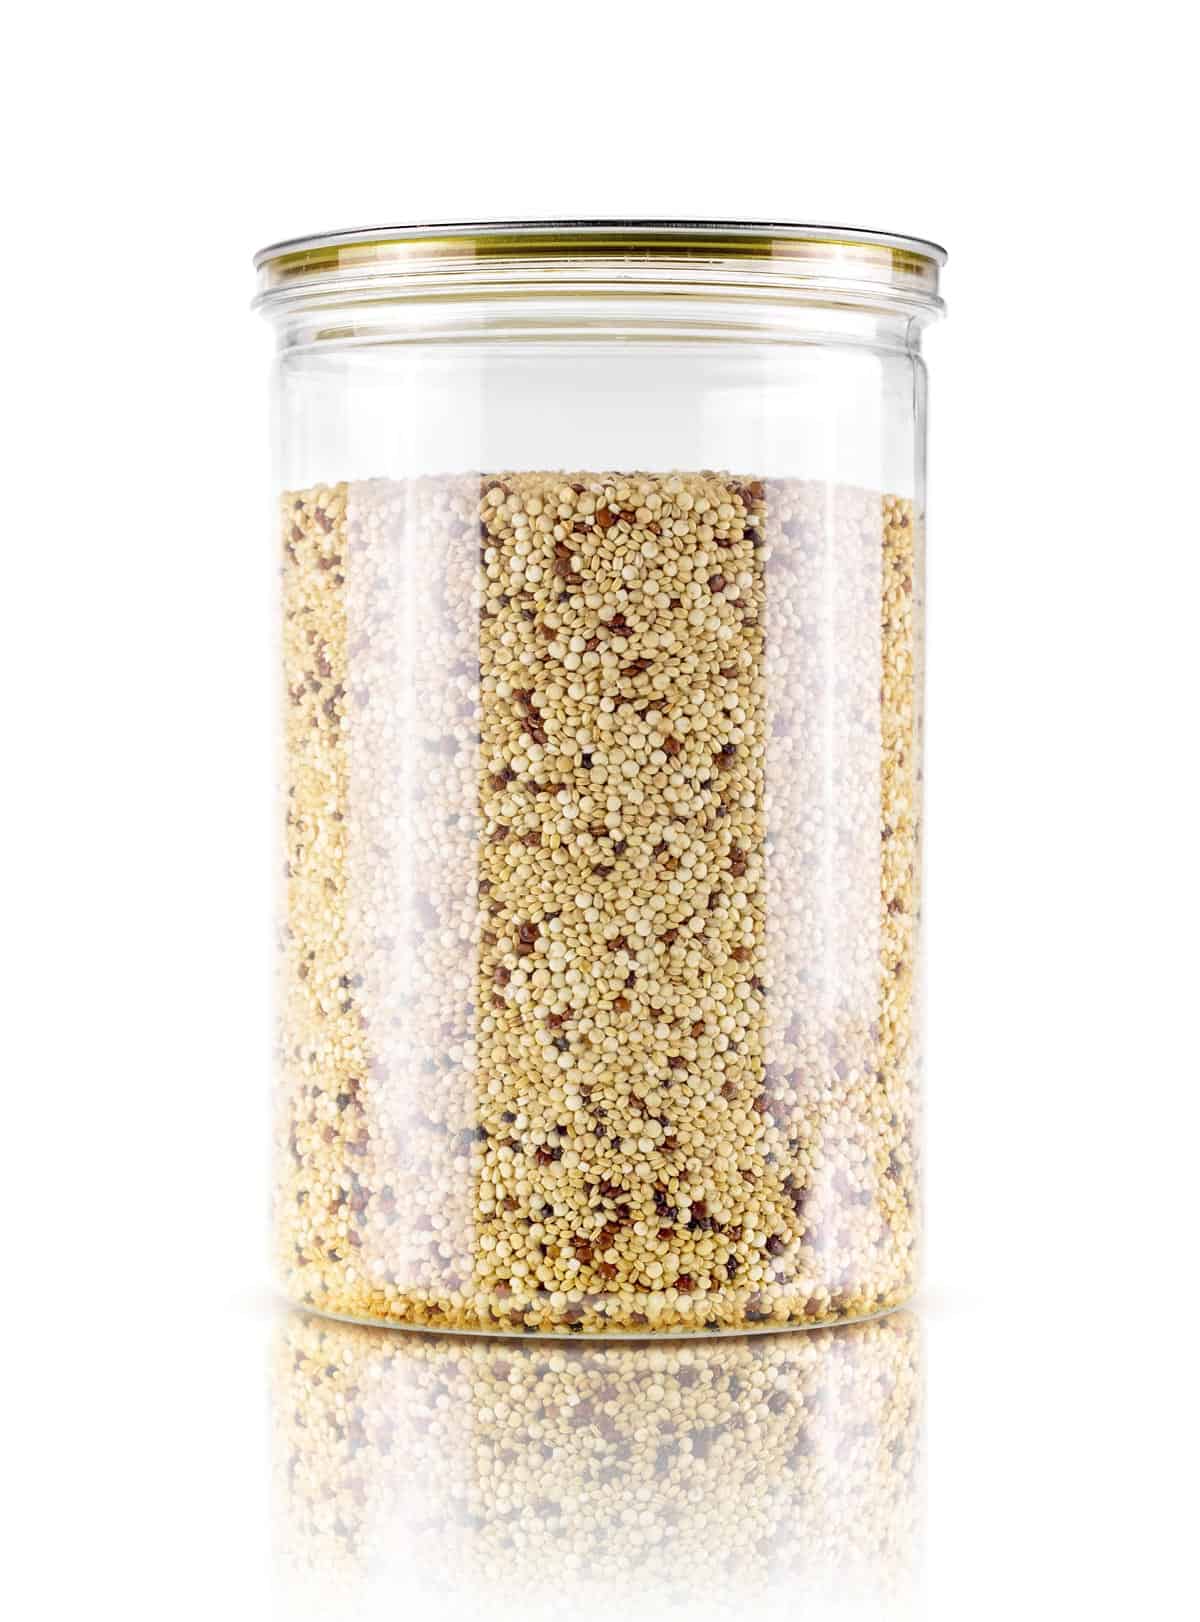 Tall glass storage jar of tri-color quinoa.